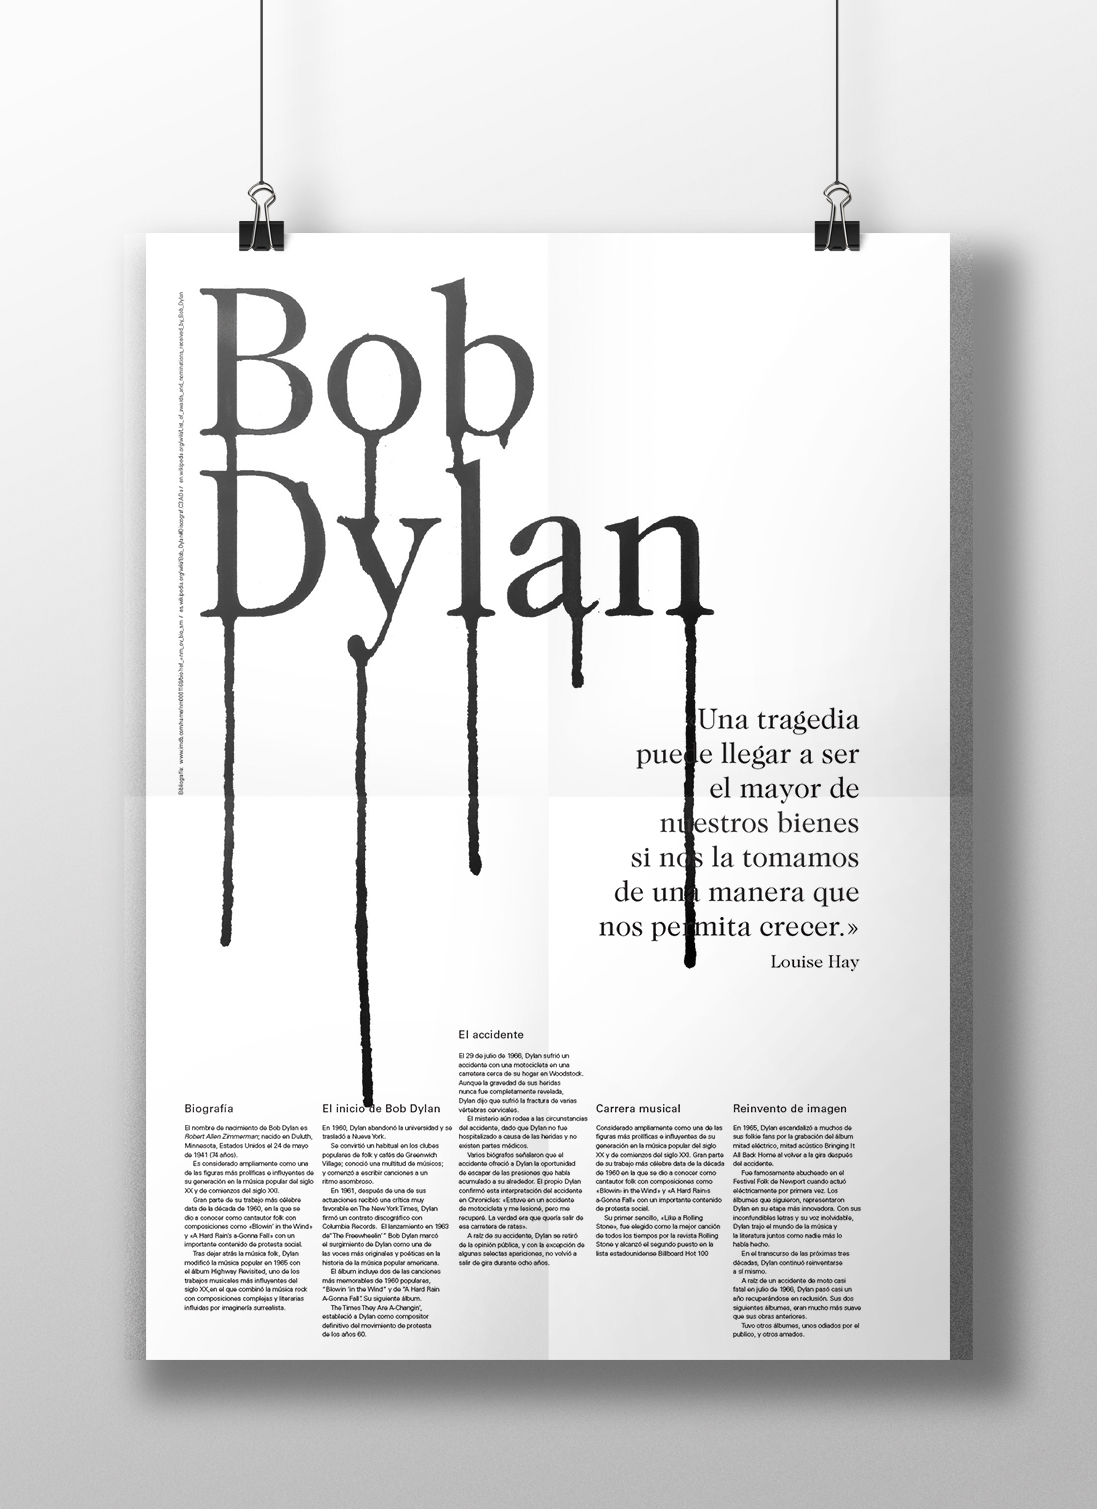 editorial informative poster bob dylan elton john tragedy concept grid system design musicians